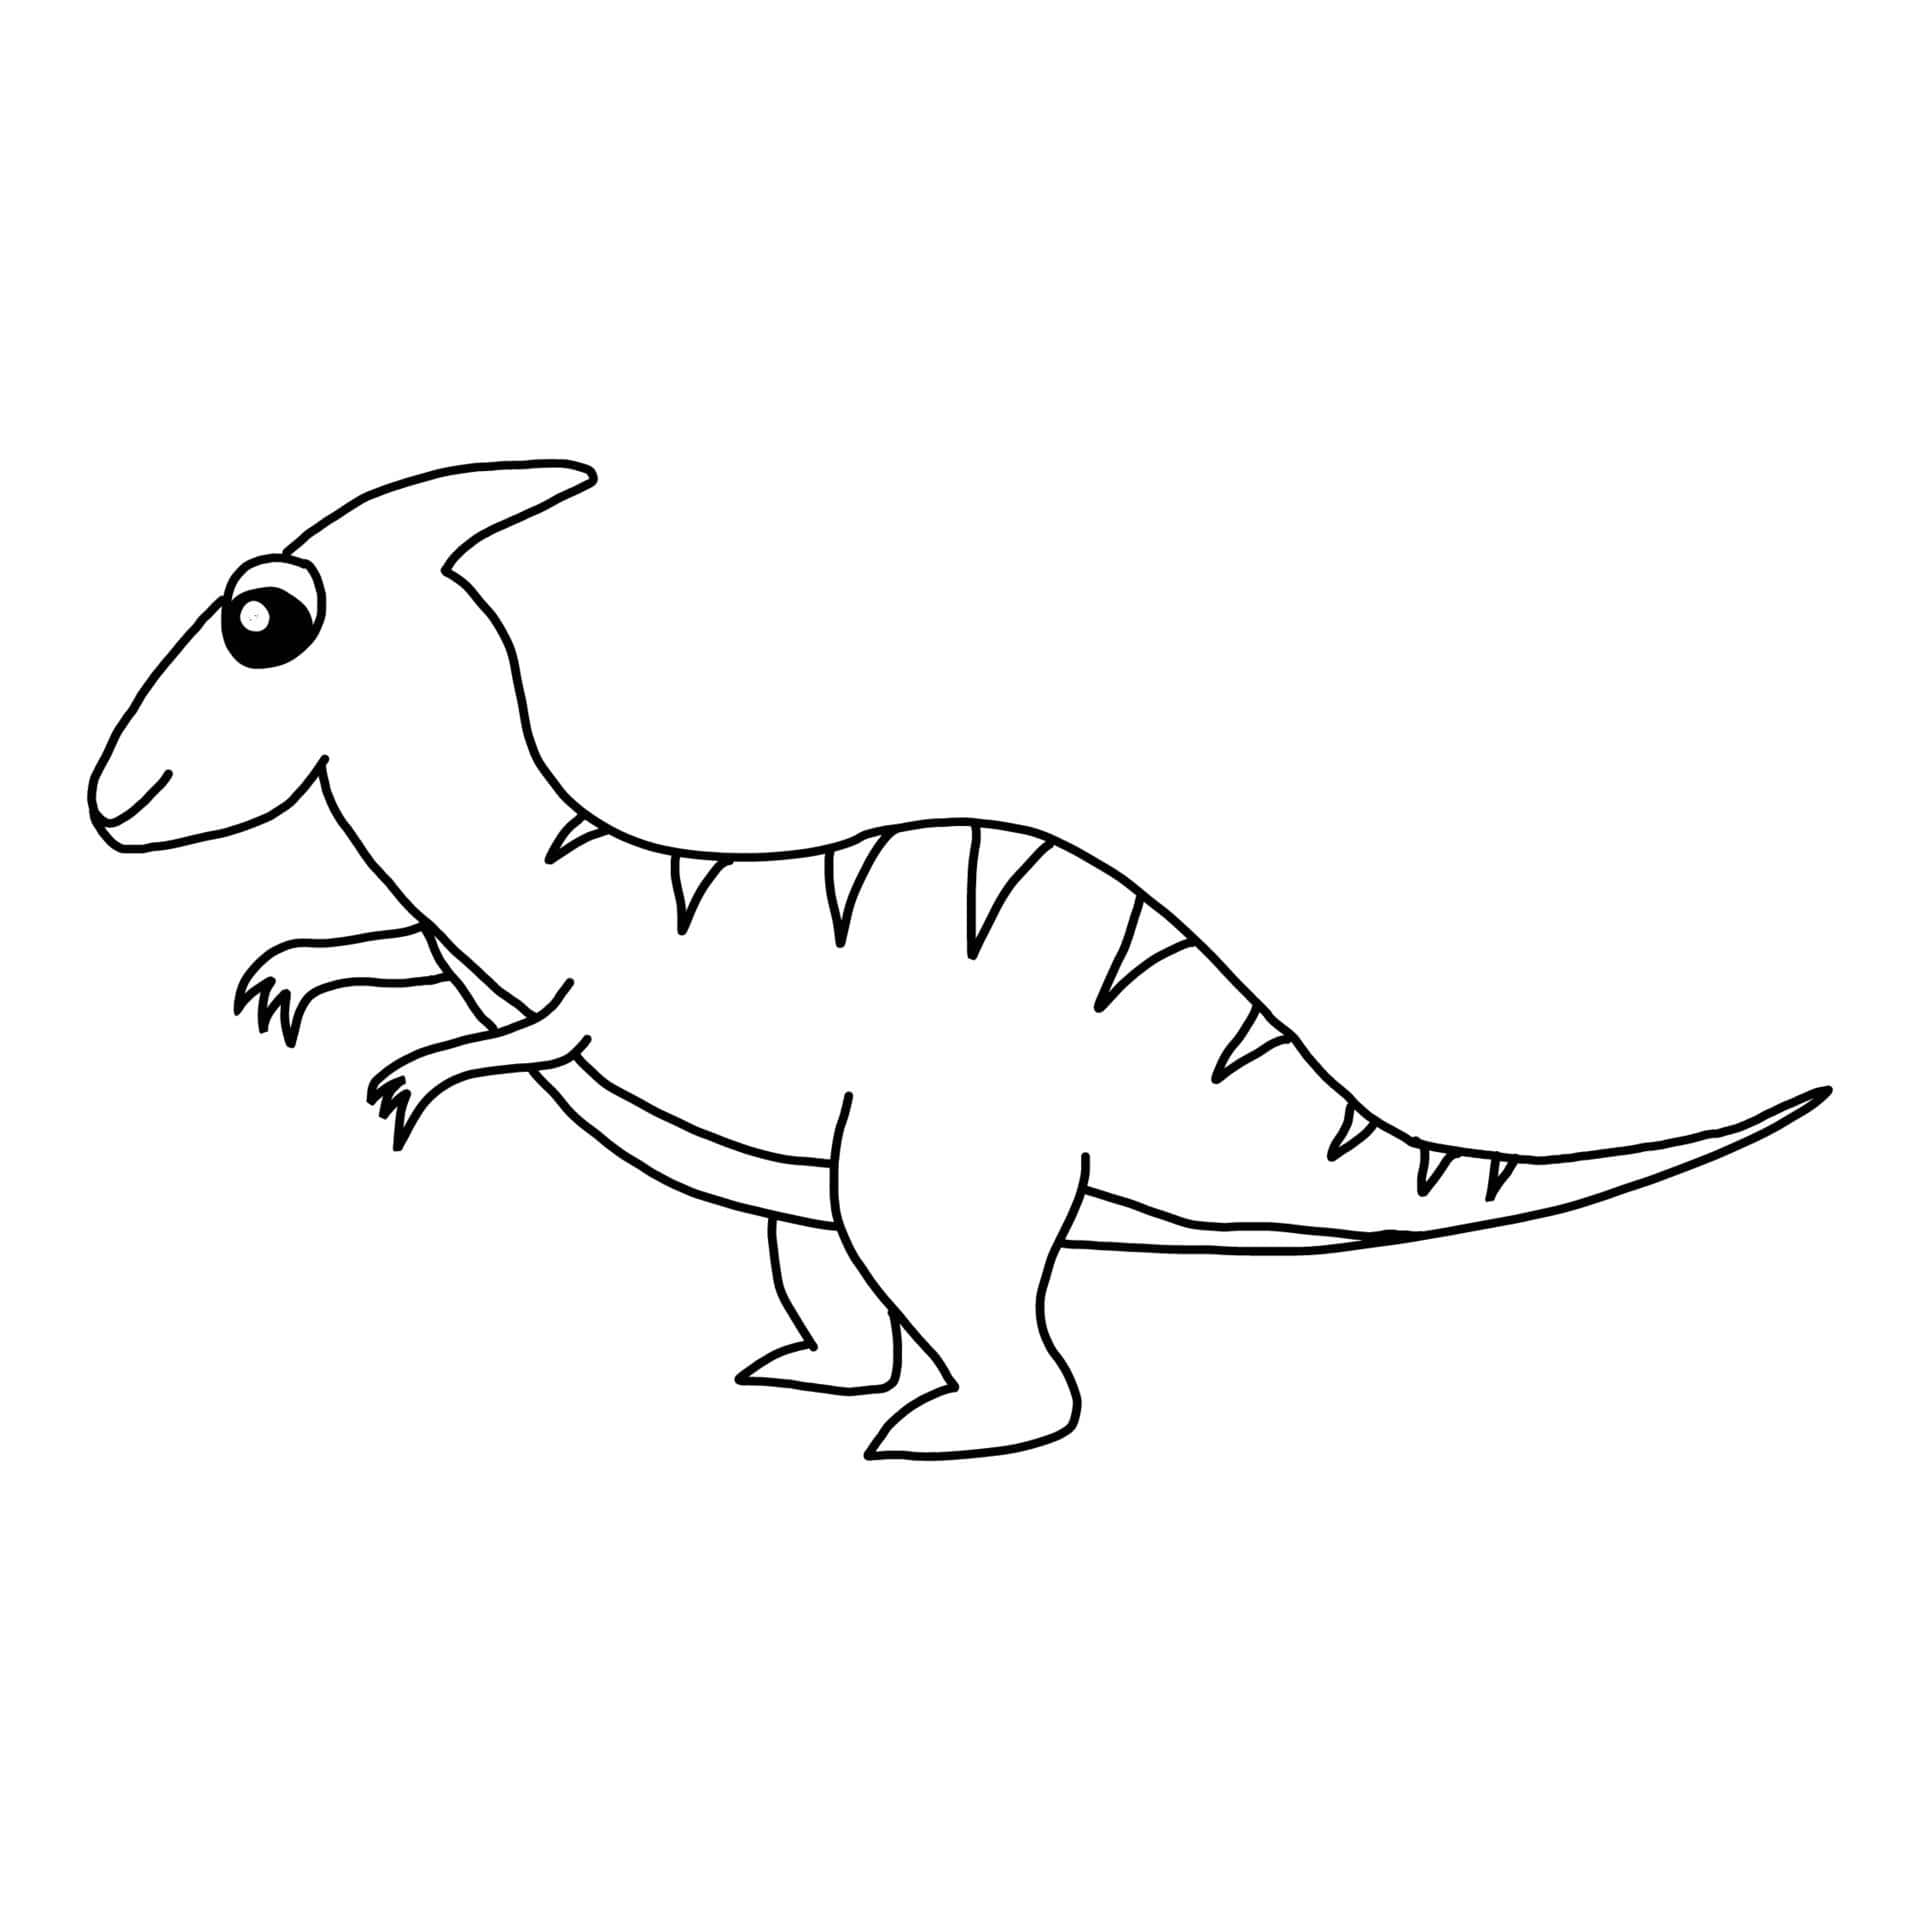 Dibujode Dinosaurio Colorido Y Creativo